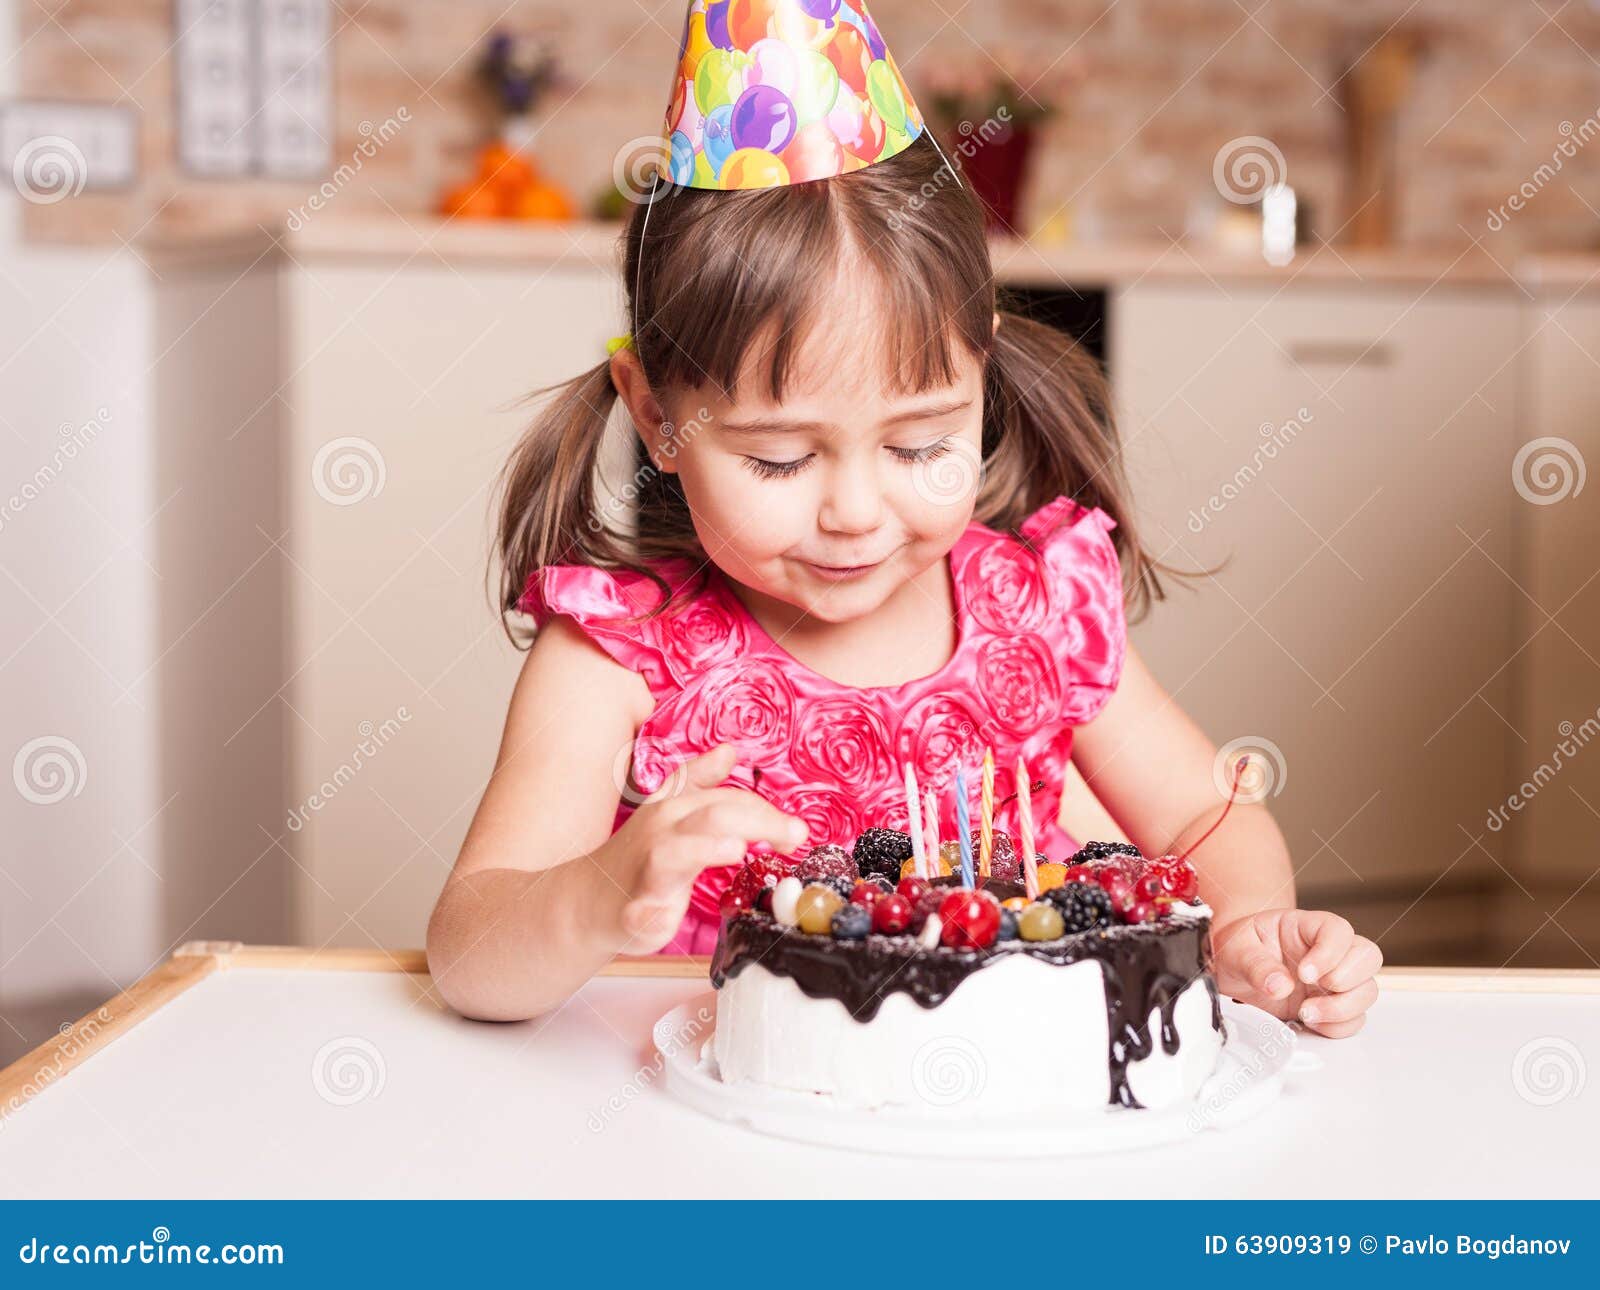 Smiling Little Girl Discovering Tasty Cake Stock Image - Image of ...